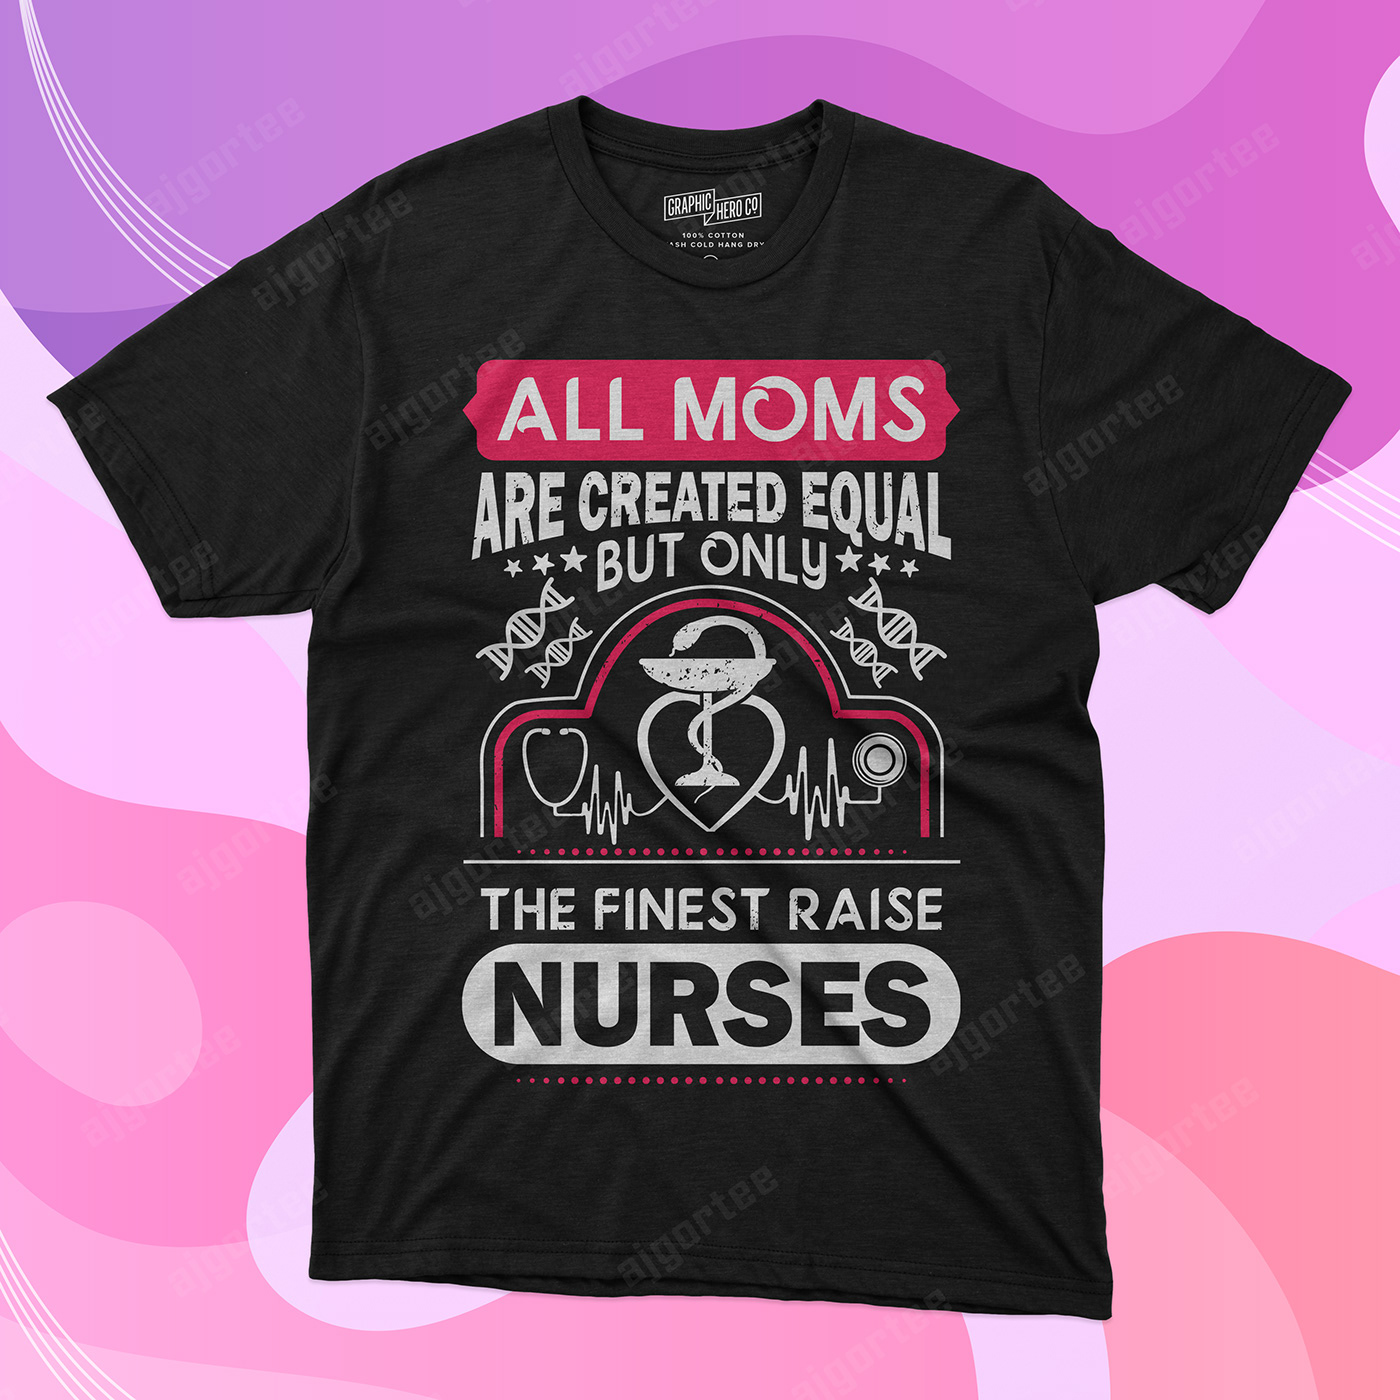 apparel clothes international nurses day nurse nurse design Nurse T shirt nurse tee nursing nursing t shirt nurse shirt